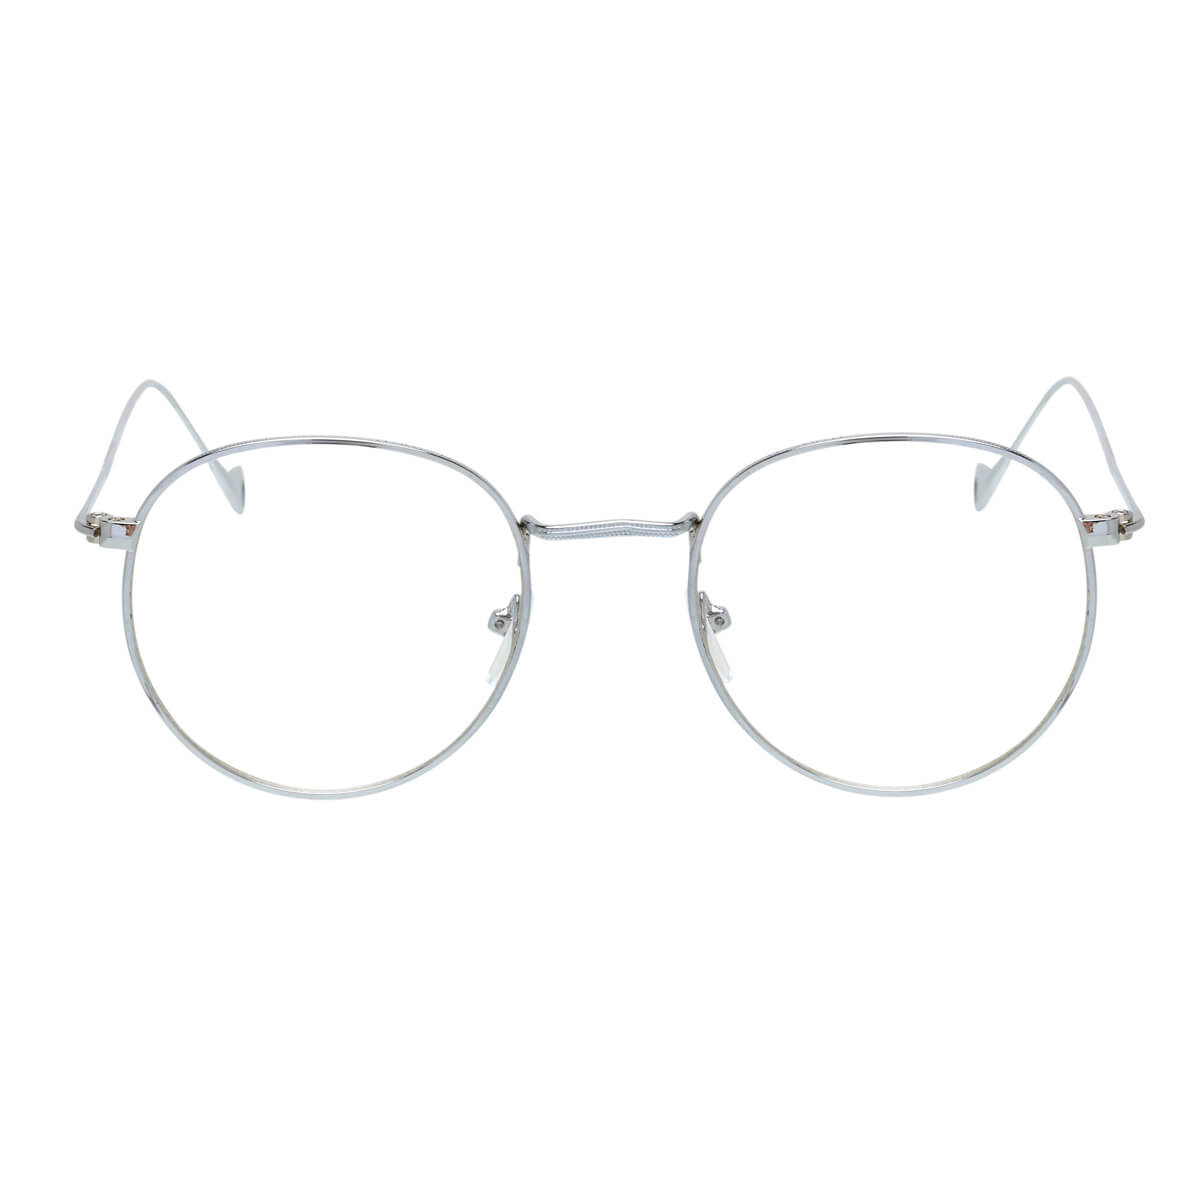 Round fake eyeglasses fake glasses metal frames